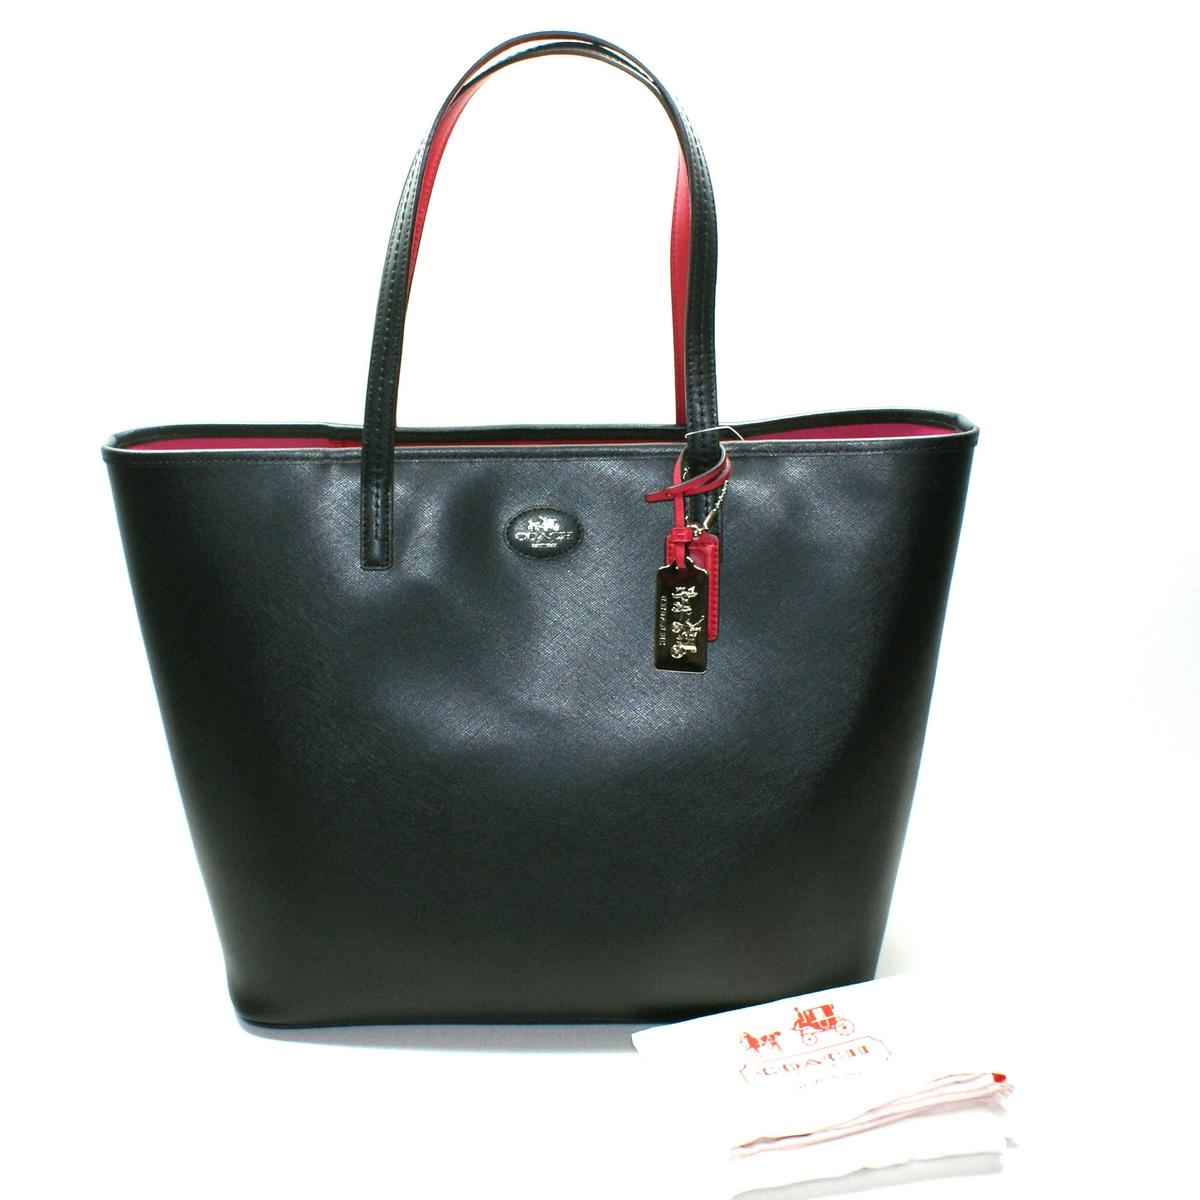 Coach Black Leather Large Tote Bag #32701 | Coach 32701